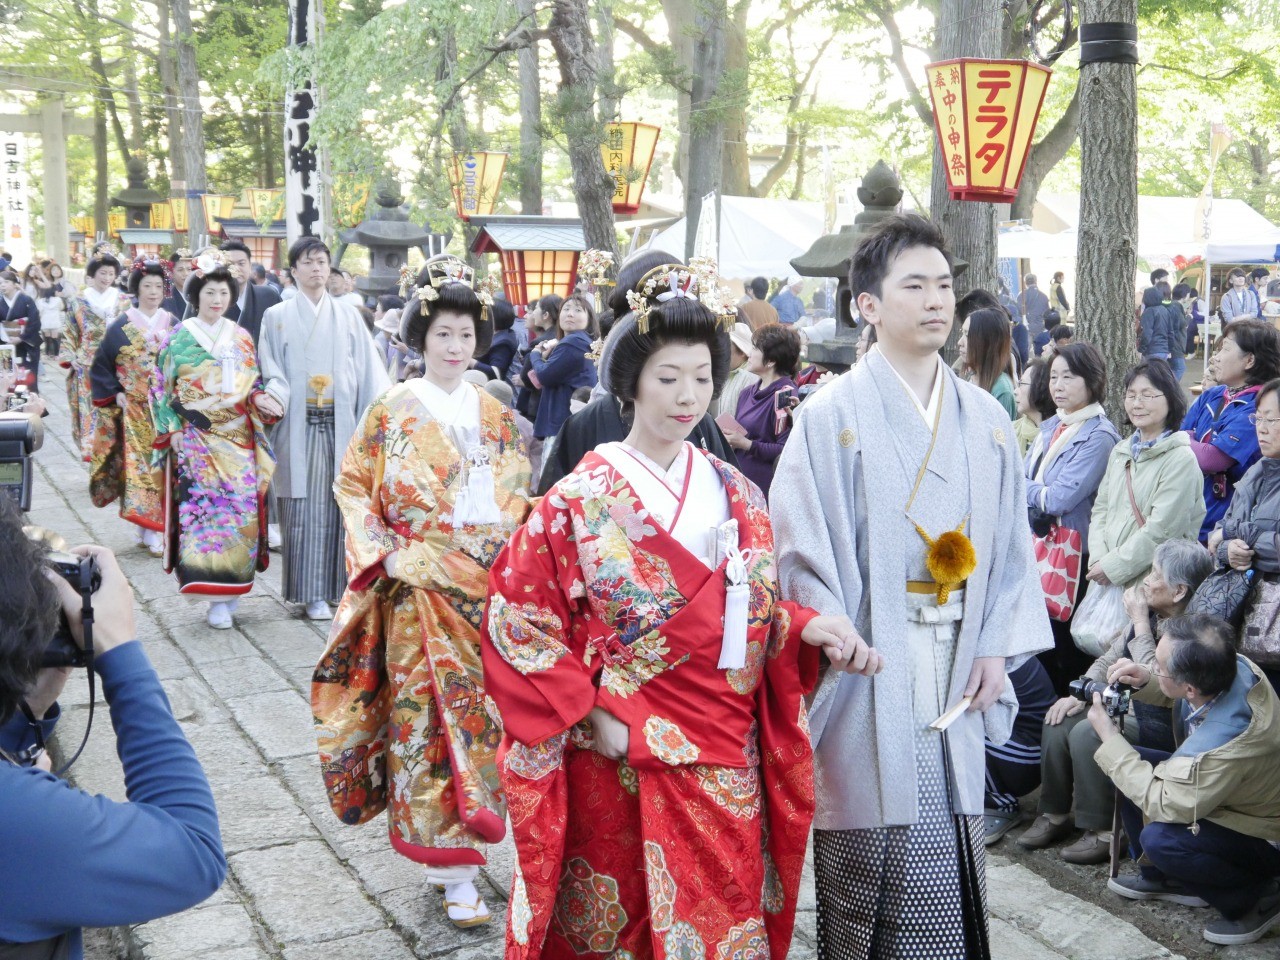 Jokkai Shrine in Hiyoshi Shrine The evening festival bride viewing festival (Noshiro City, Akita Prefecture)